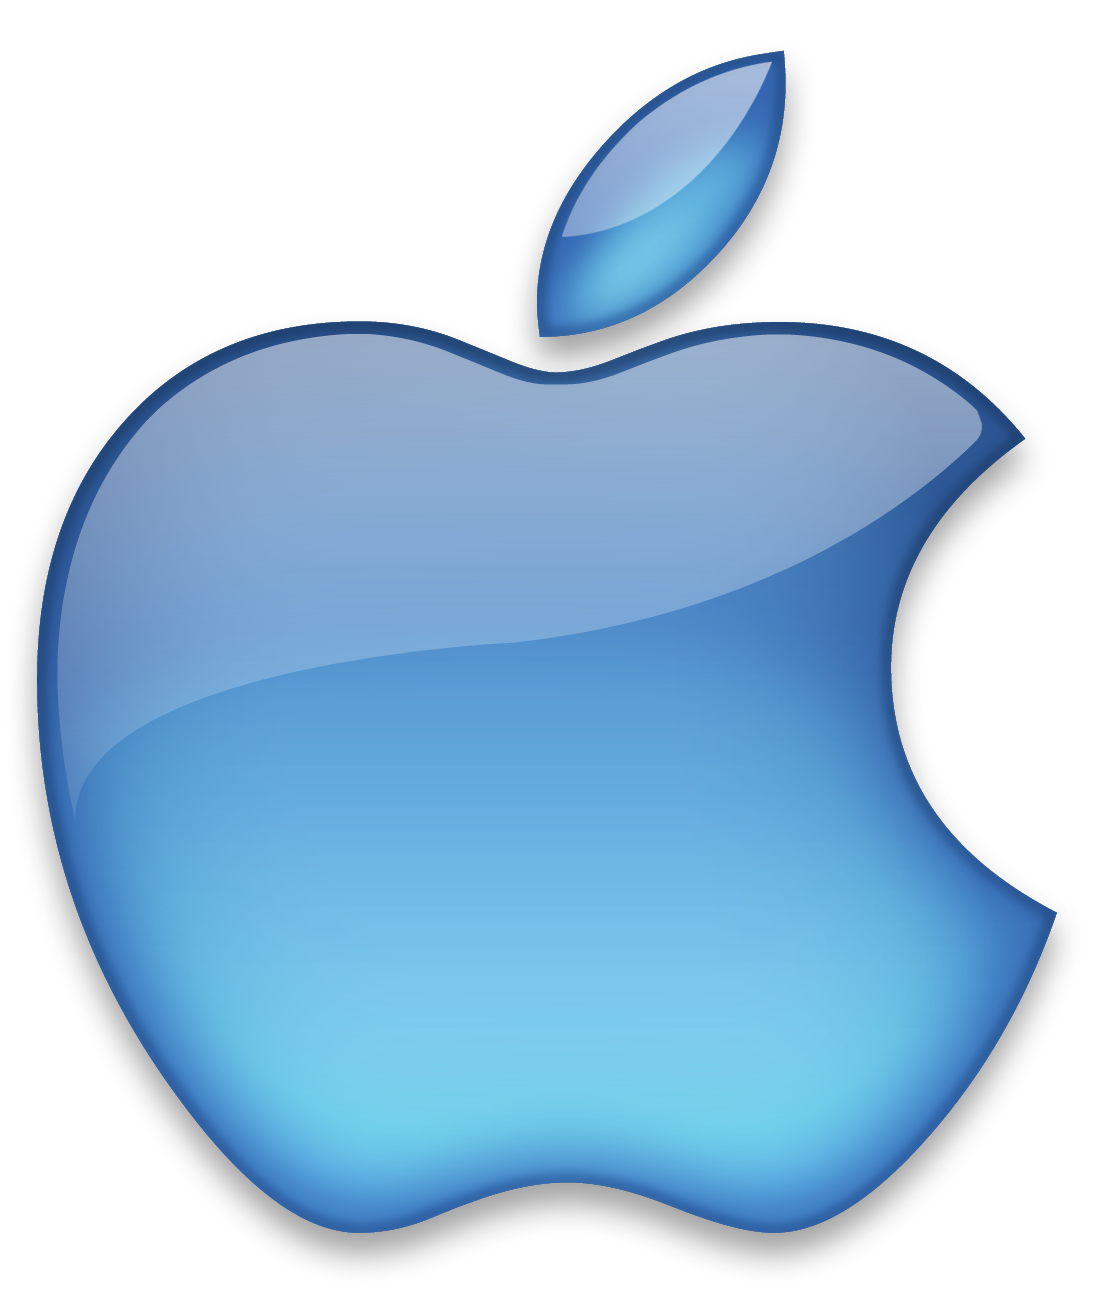 Blue apple logo icon